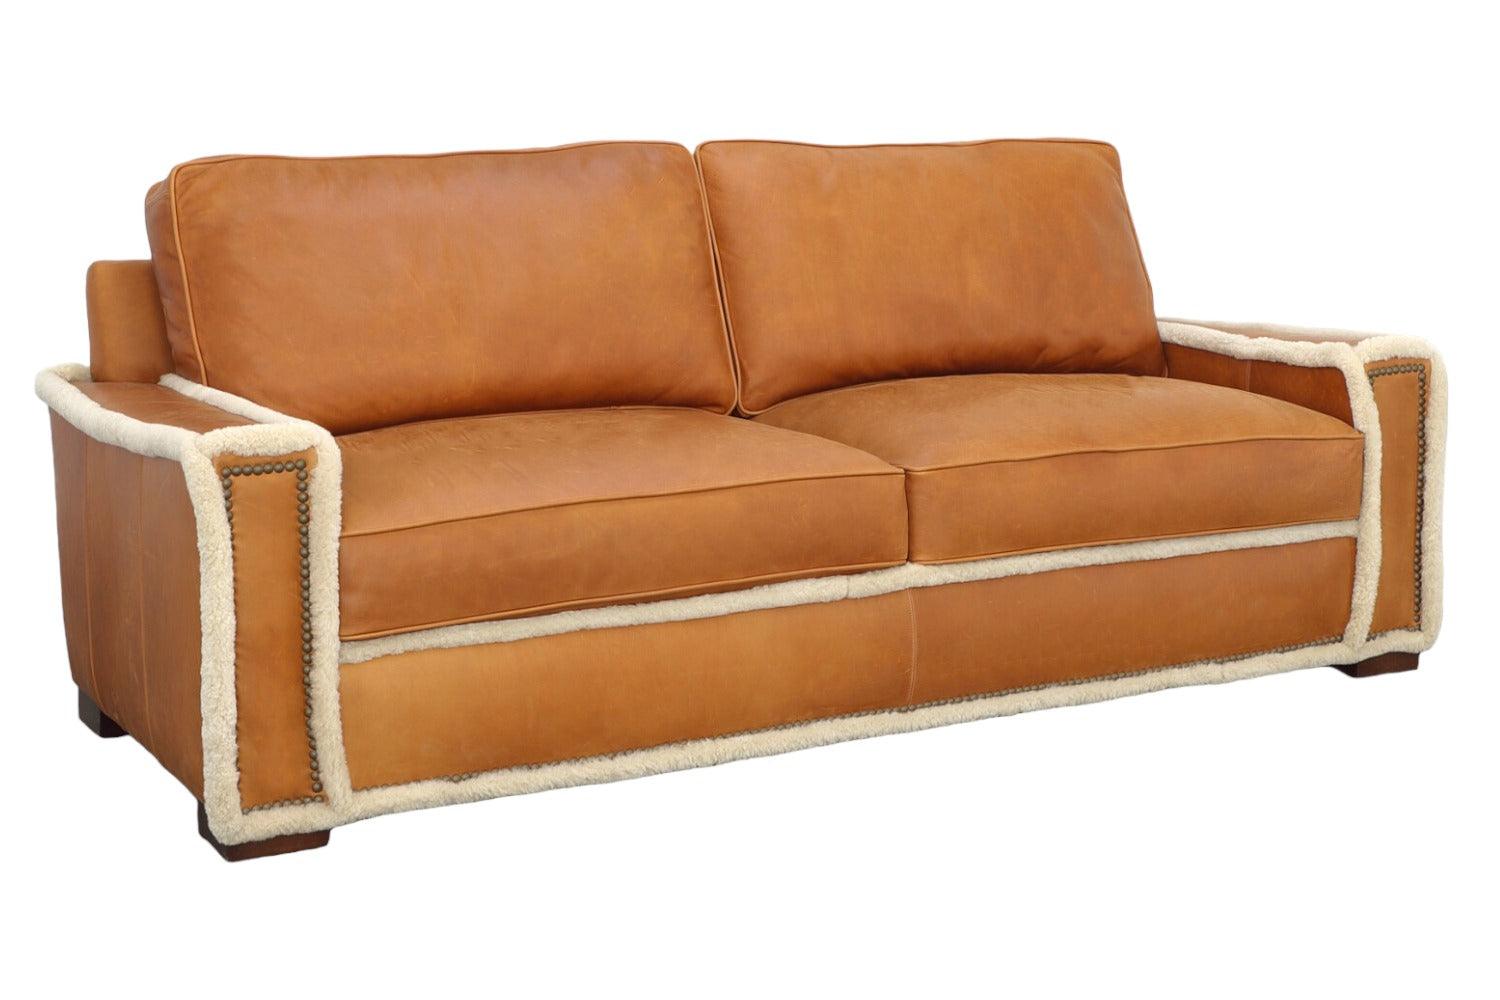 Choosing a sofa with cushions or a tight back - Uptown Sebastian